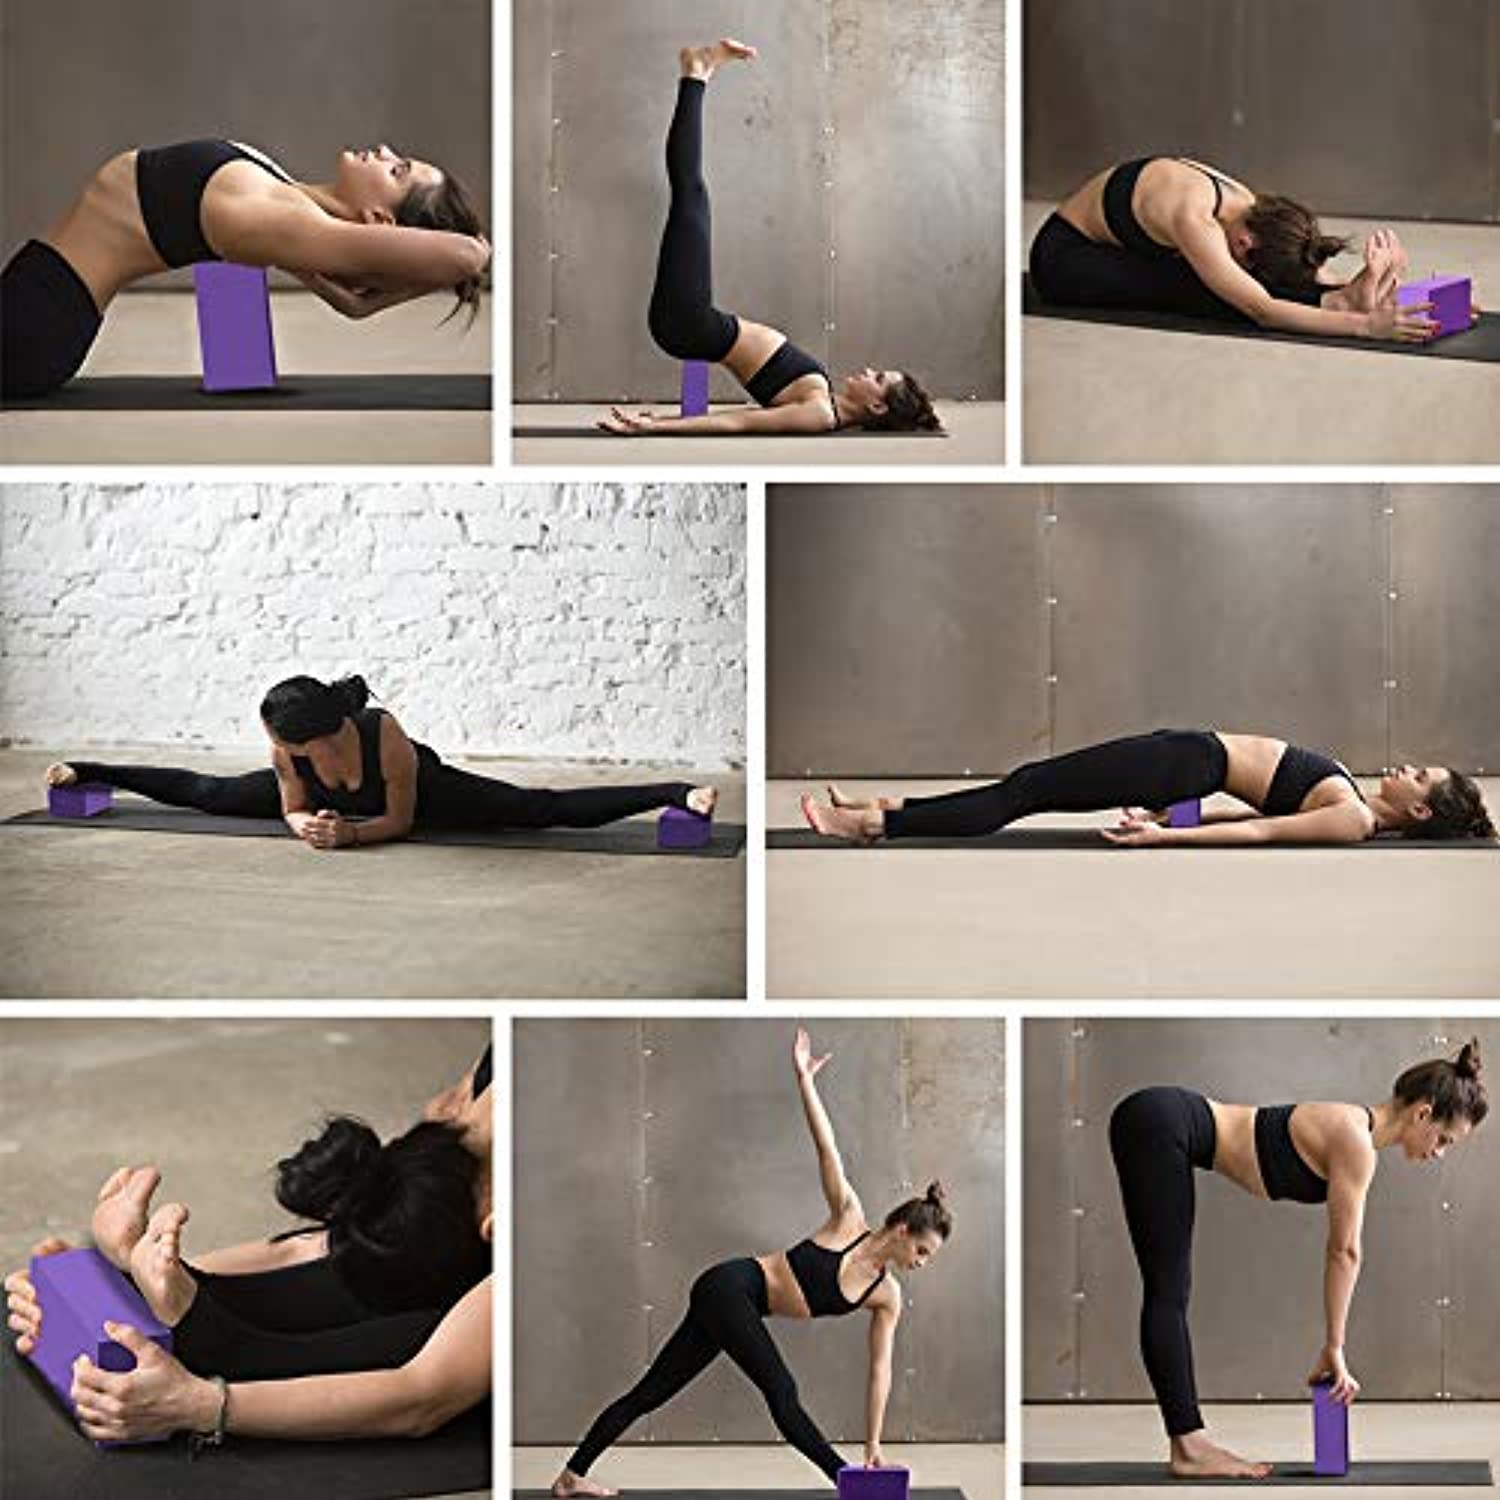 10 bloques de yoga a granel, bloques de espuma EVA a granel, accesorios de  yoga de ladrillo de espuma de alta densidad, mejoran la fuerza y ayudan al